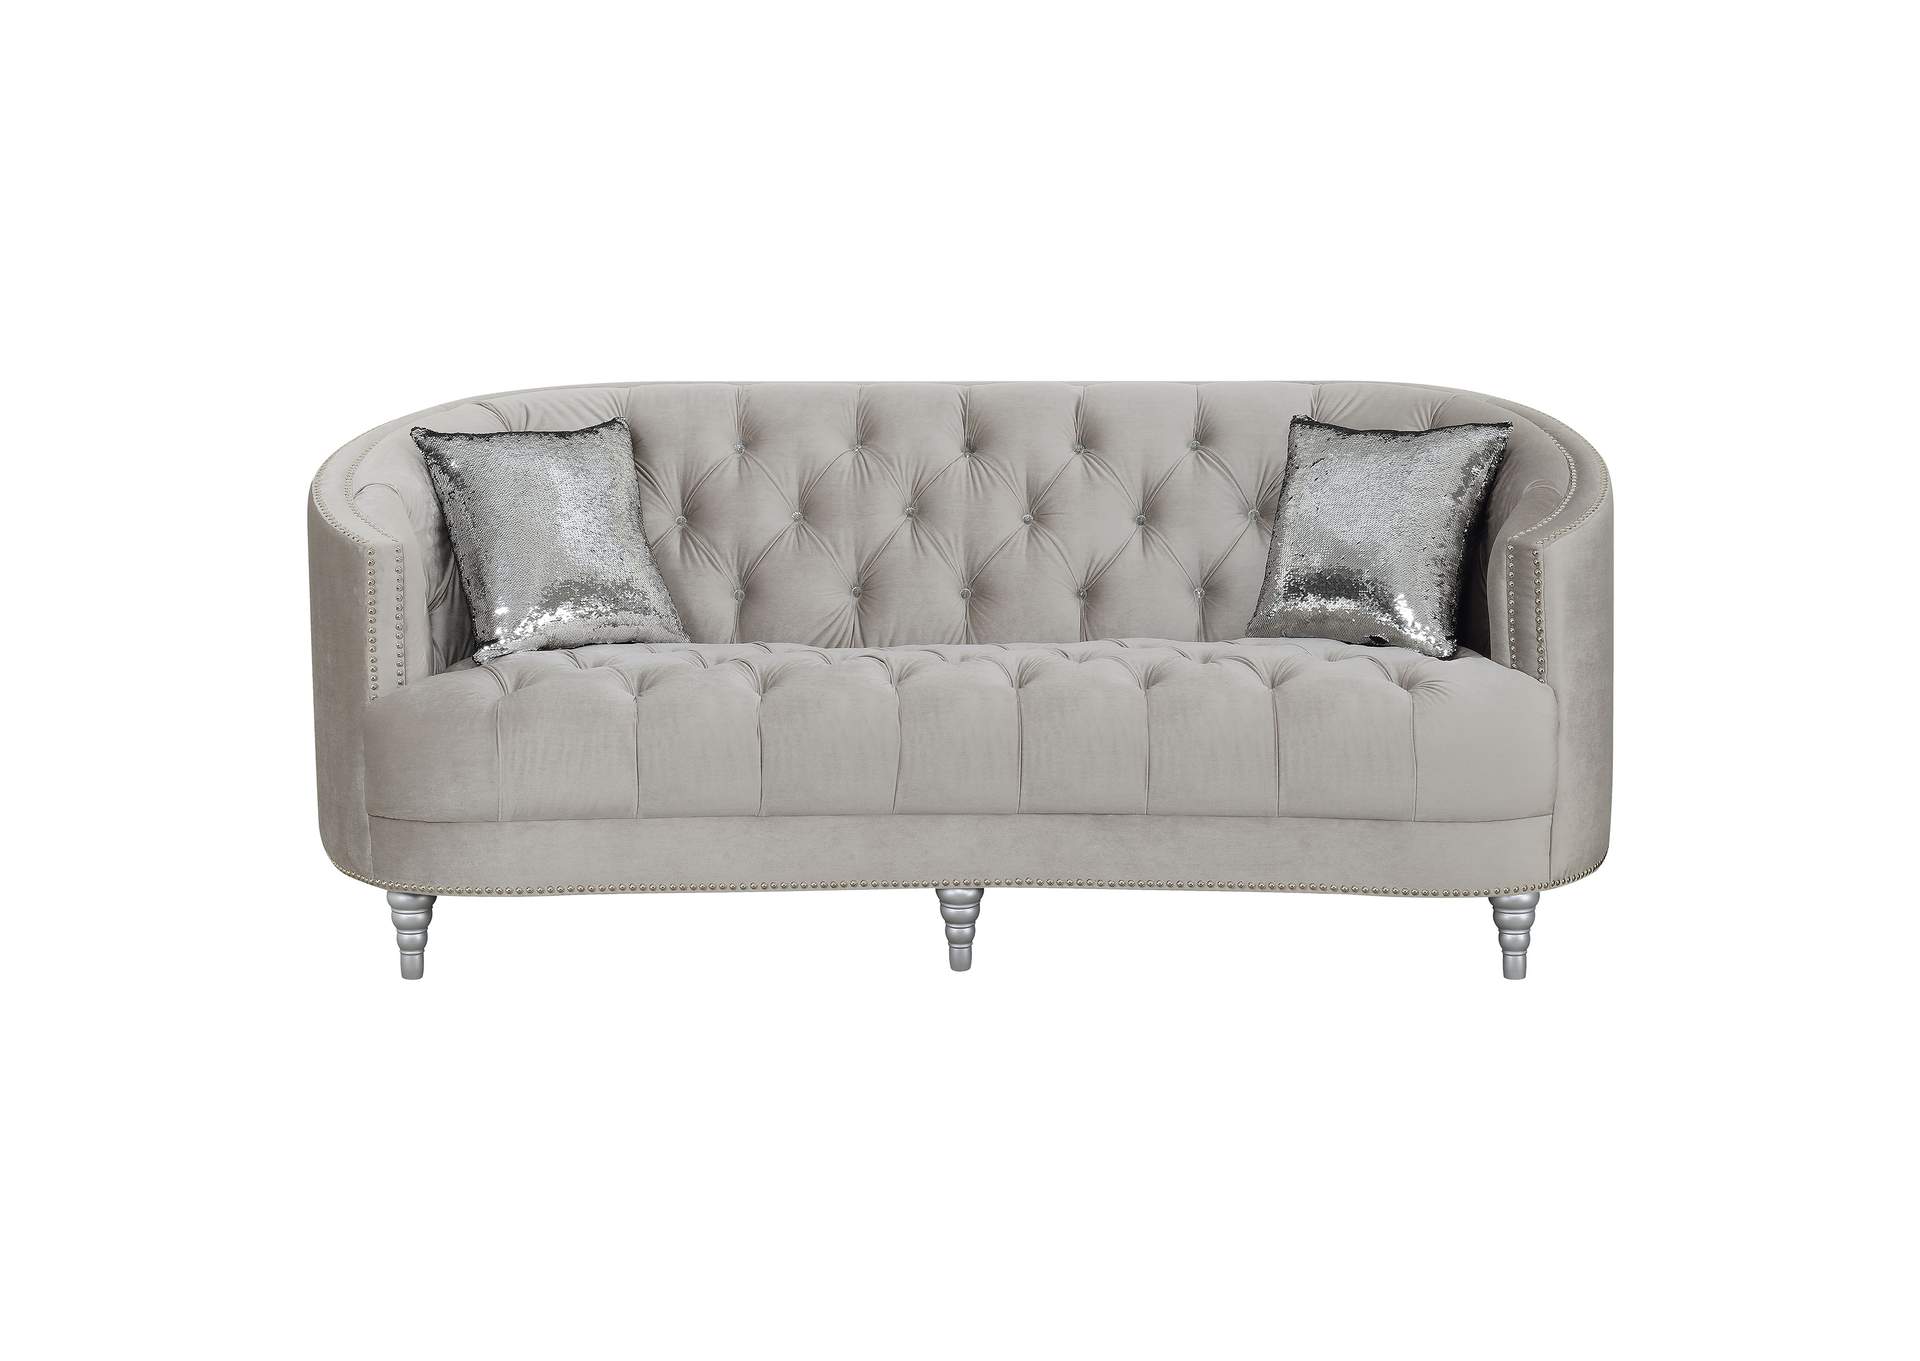 Avonlea 2-piece Tufted Living Room Set Grey,Coaster Furniture